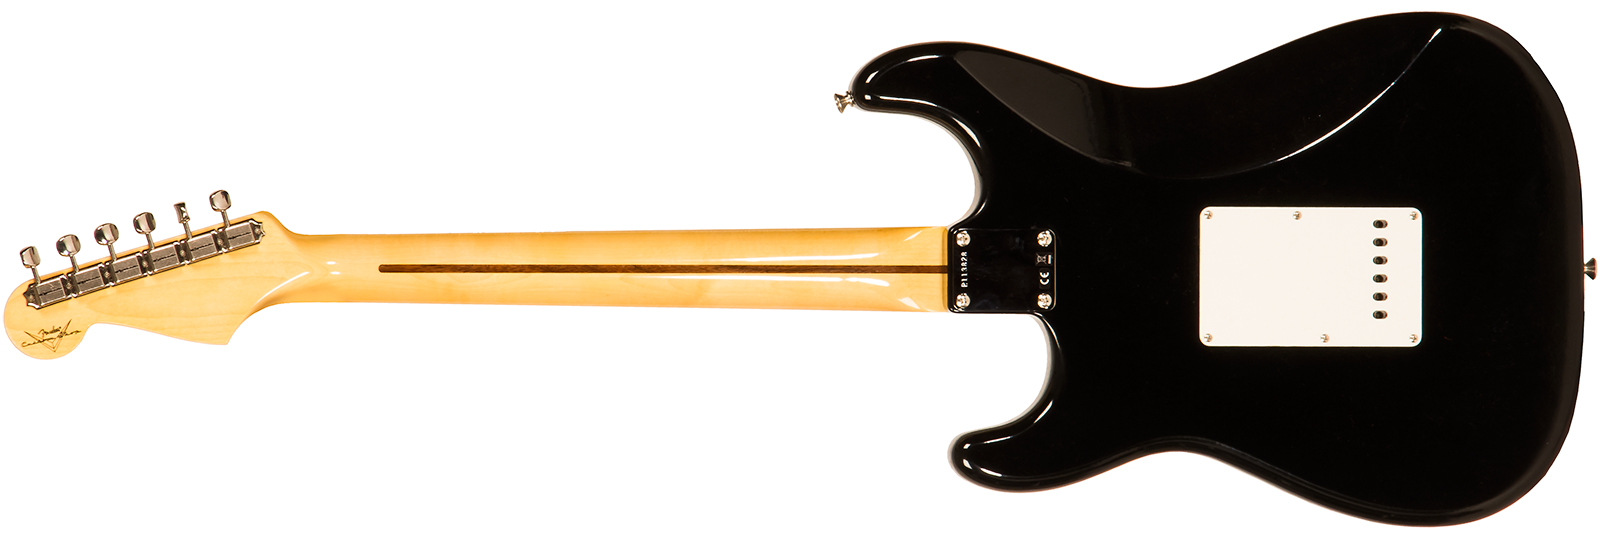 Fender Custom Shop Strat 1958 3s Trem Mn #r113828 - Closet Classic Black - Elektrische gitaar in Str-vorm - Variation 1